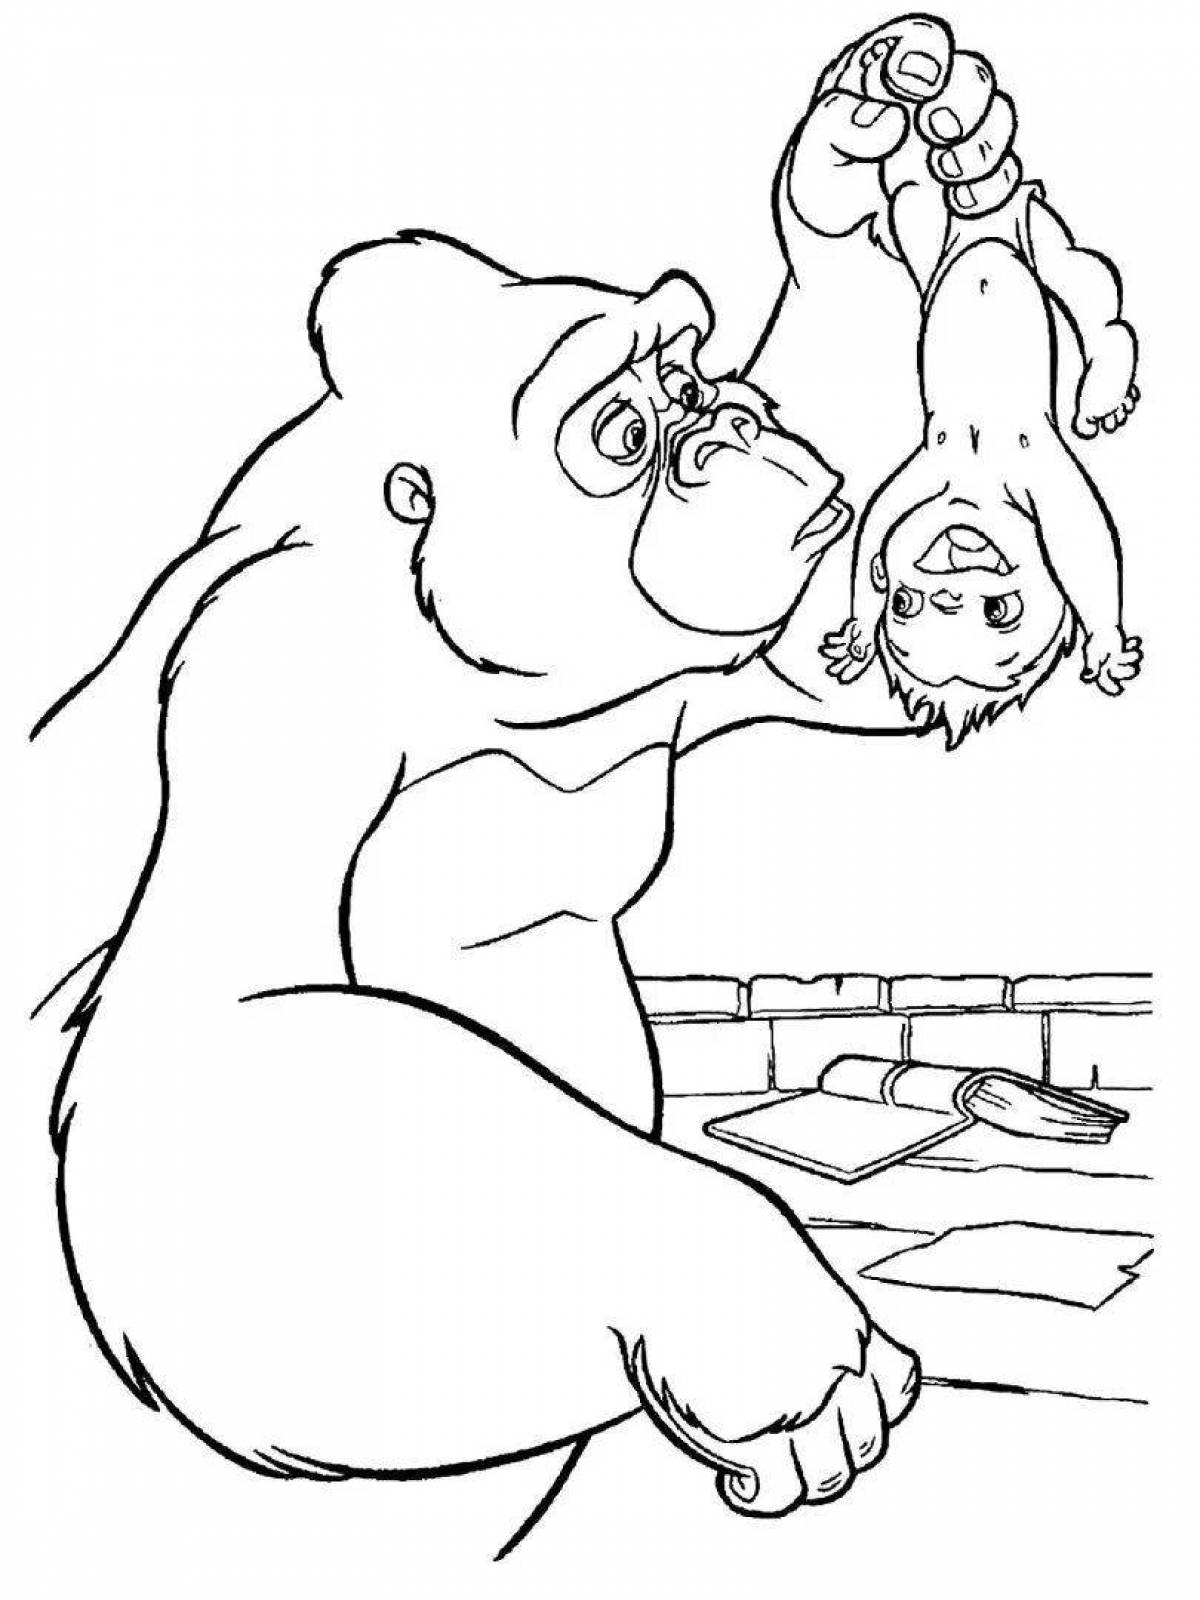 Adorable gorilla coloring book for kids